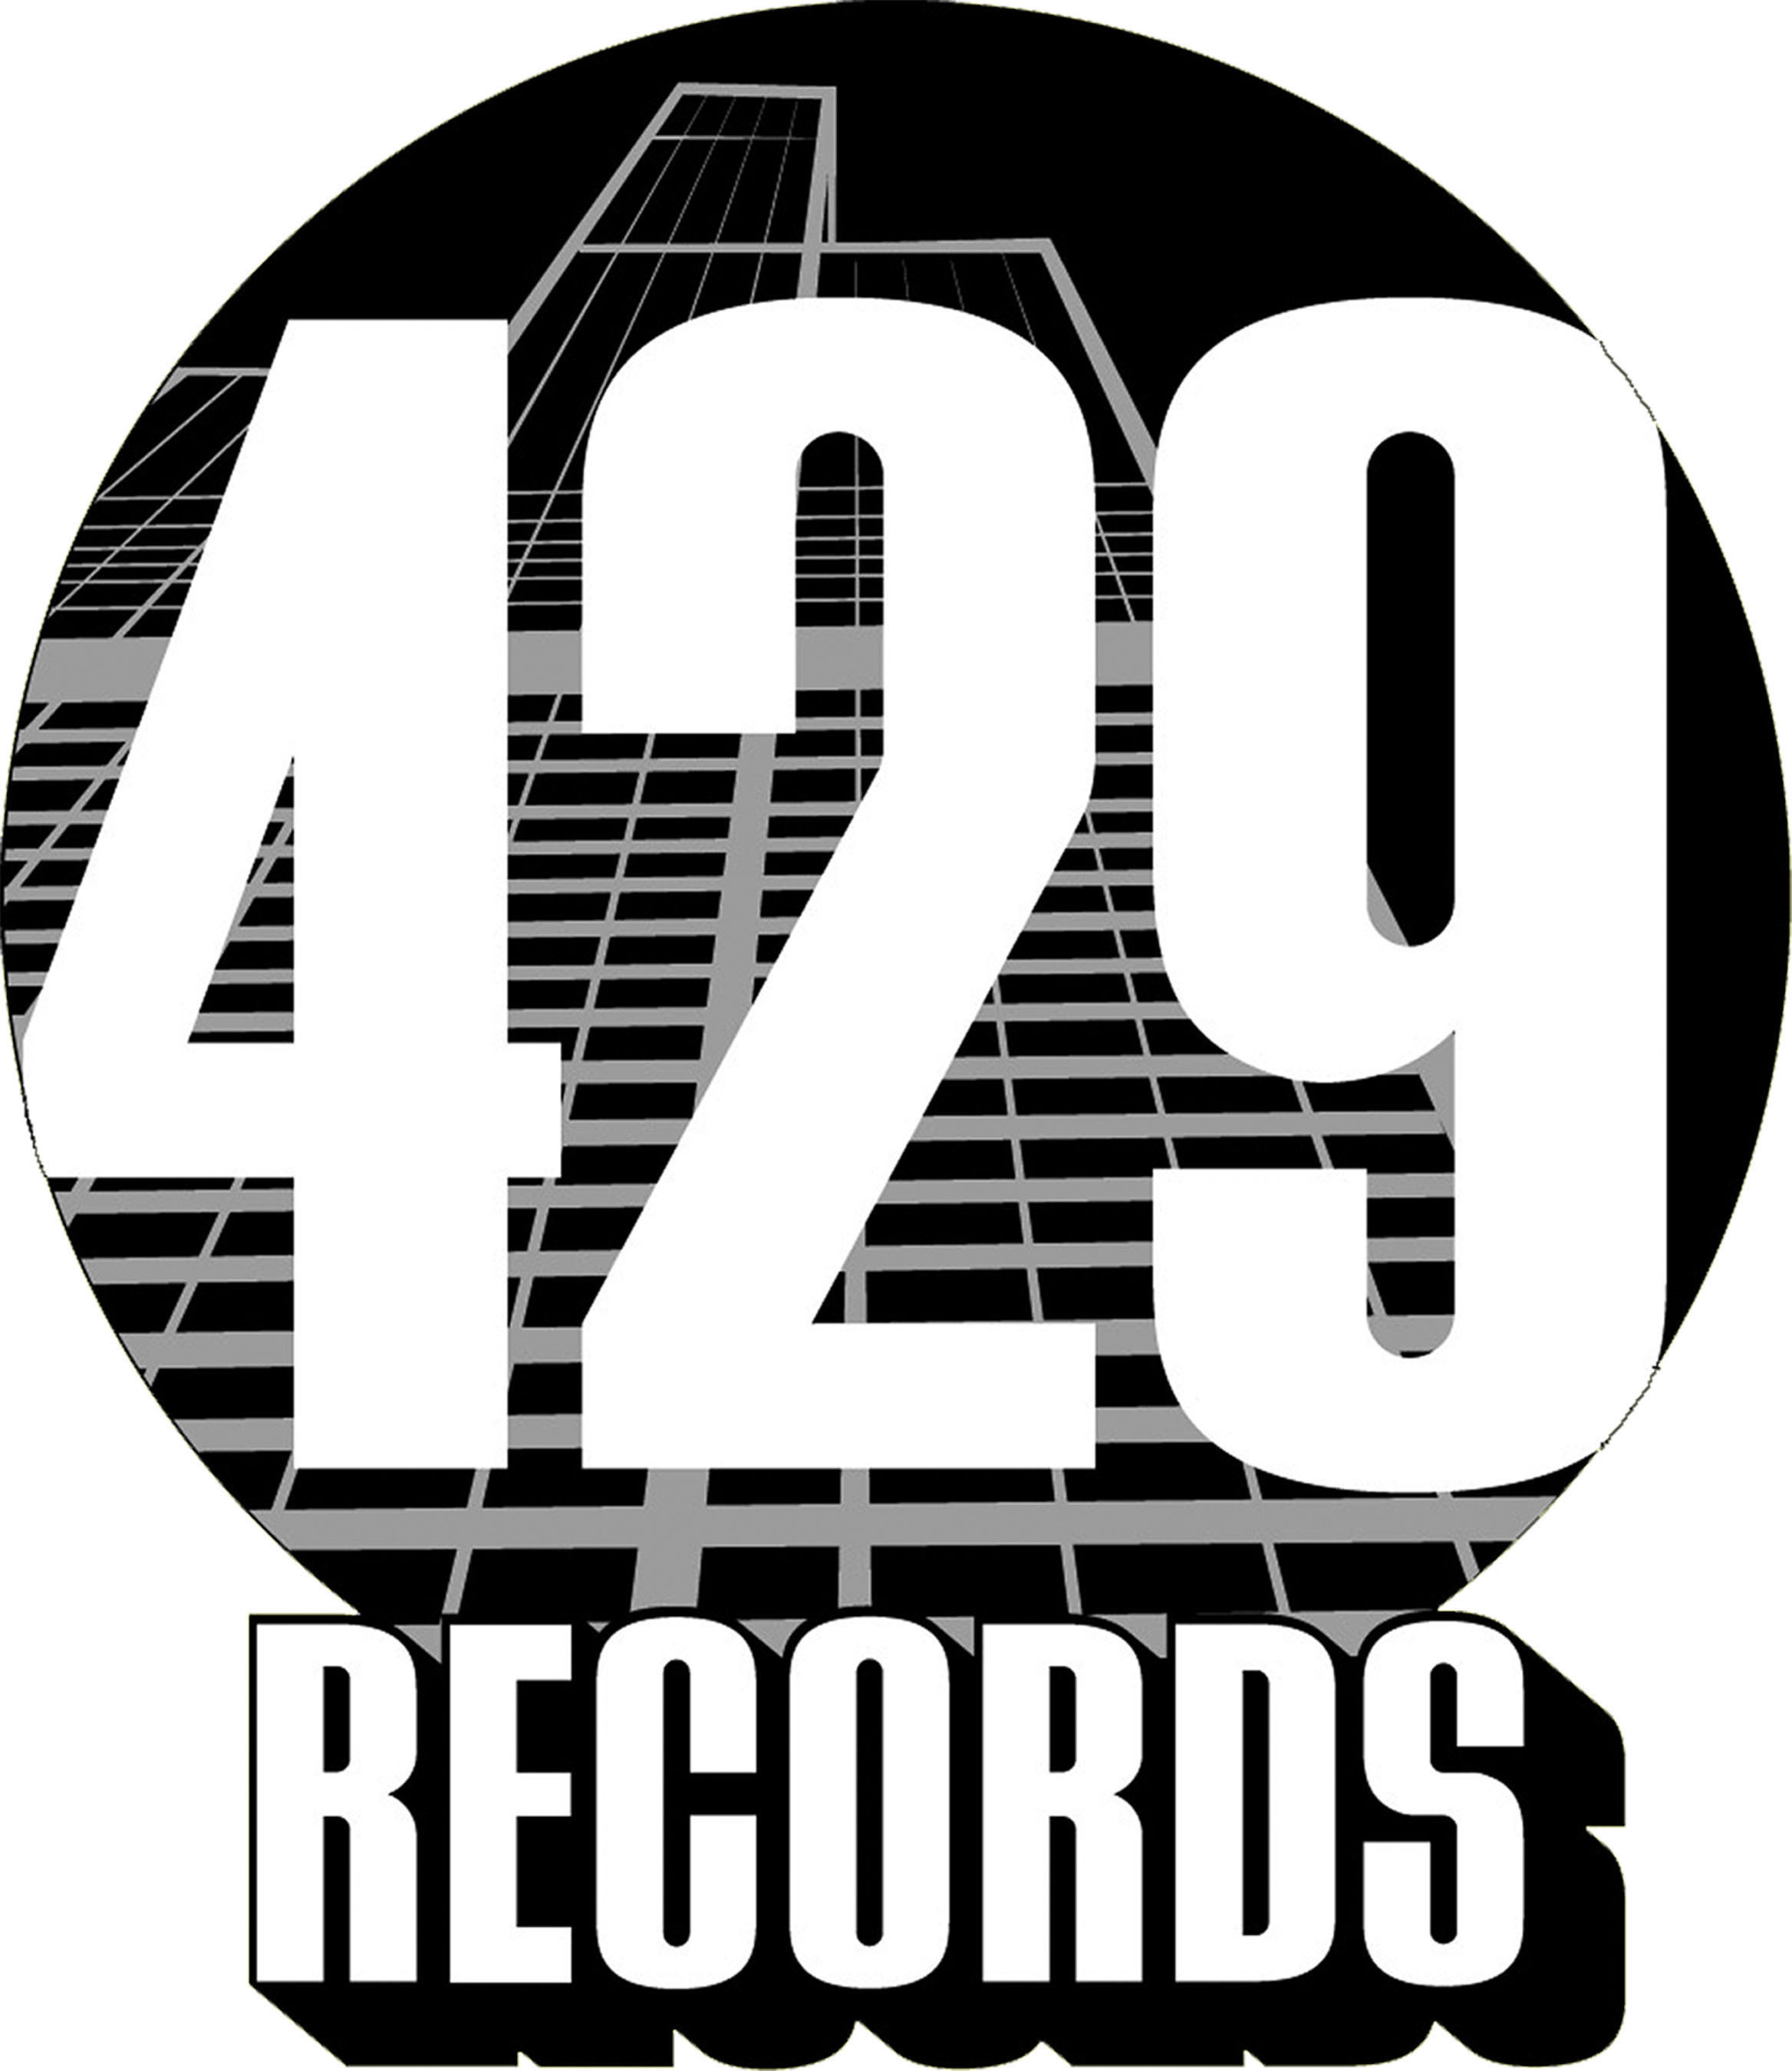 429 Records logo. (PRNewsFoto/429 Records) (PRNewsFoto/)